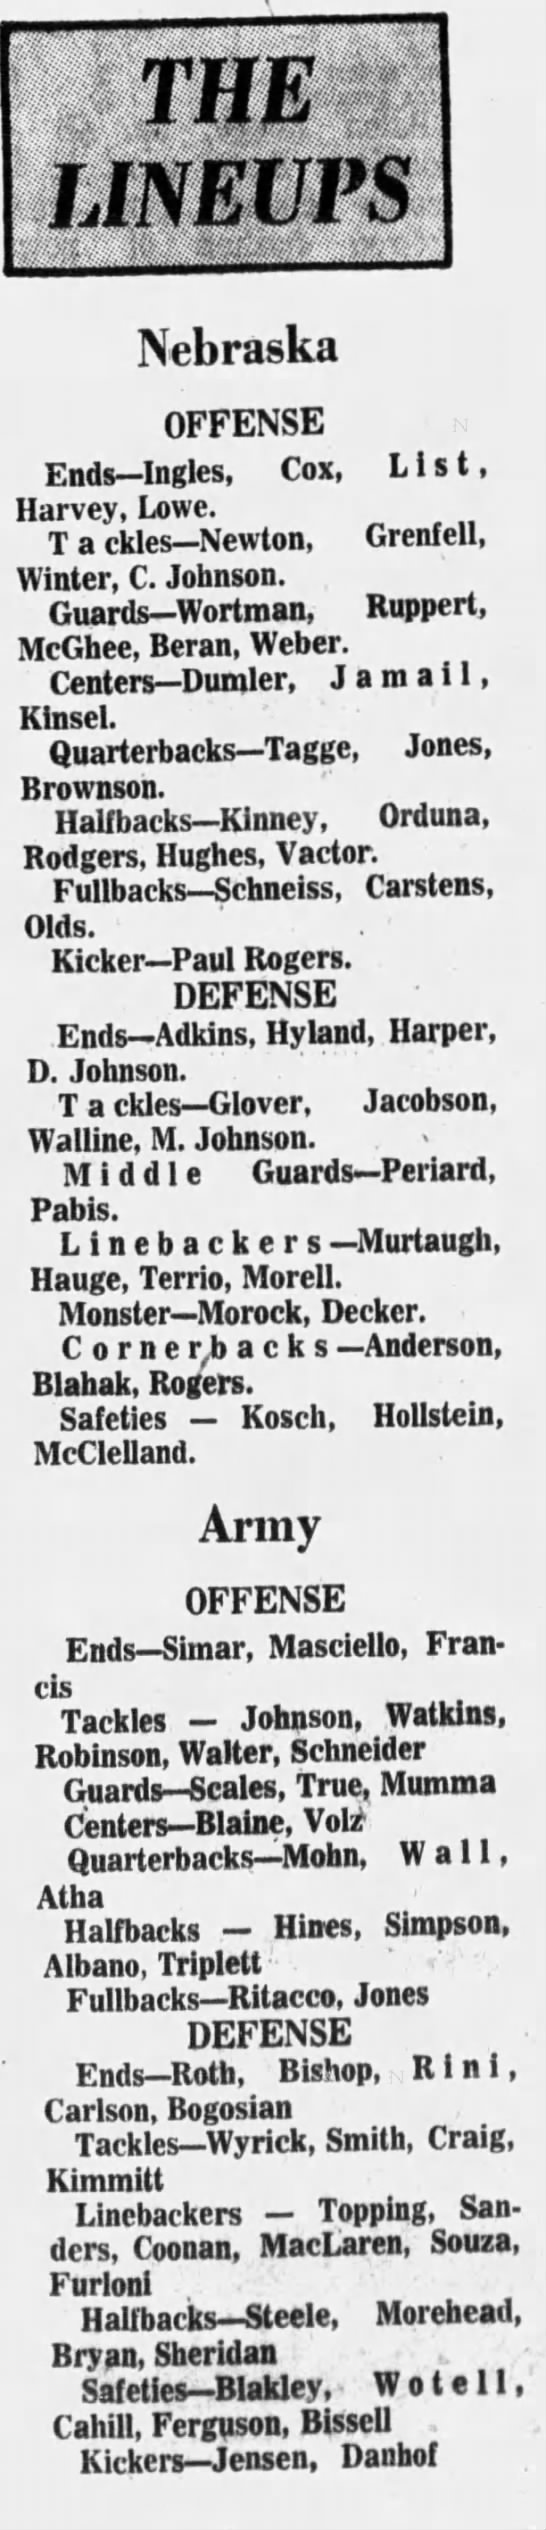 1970 Nebraska-Army lineups - 